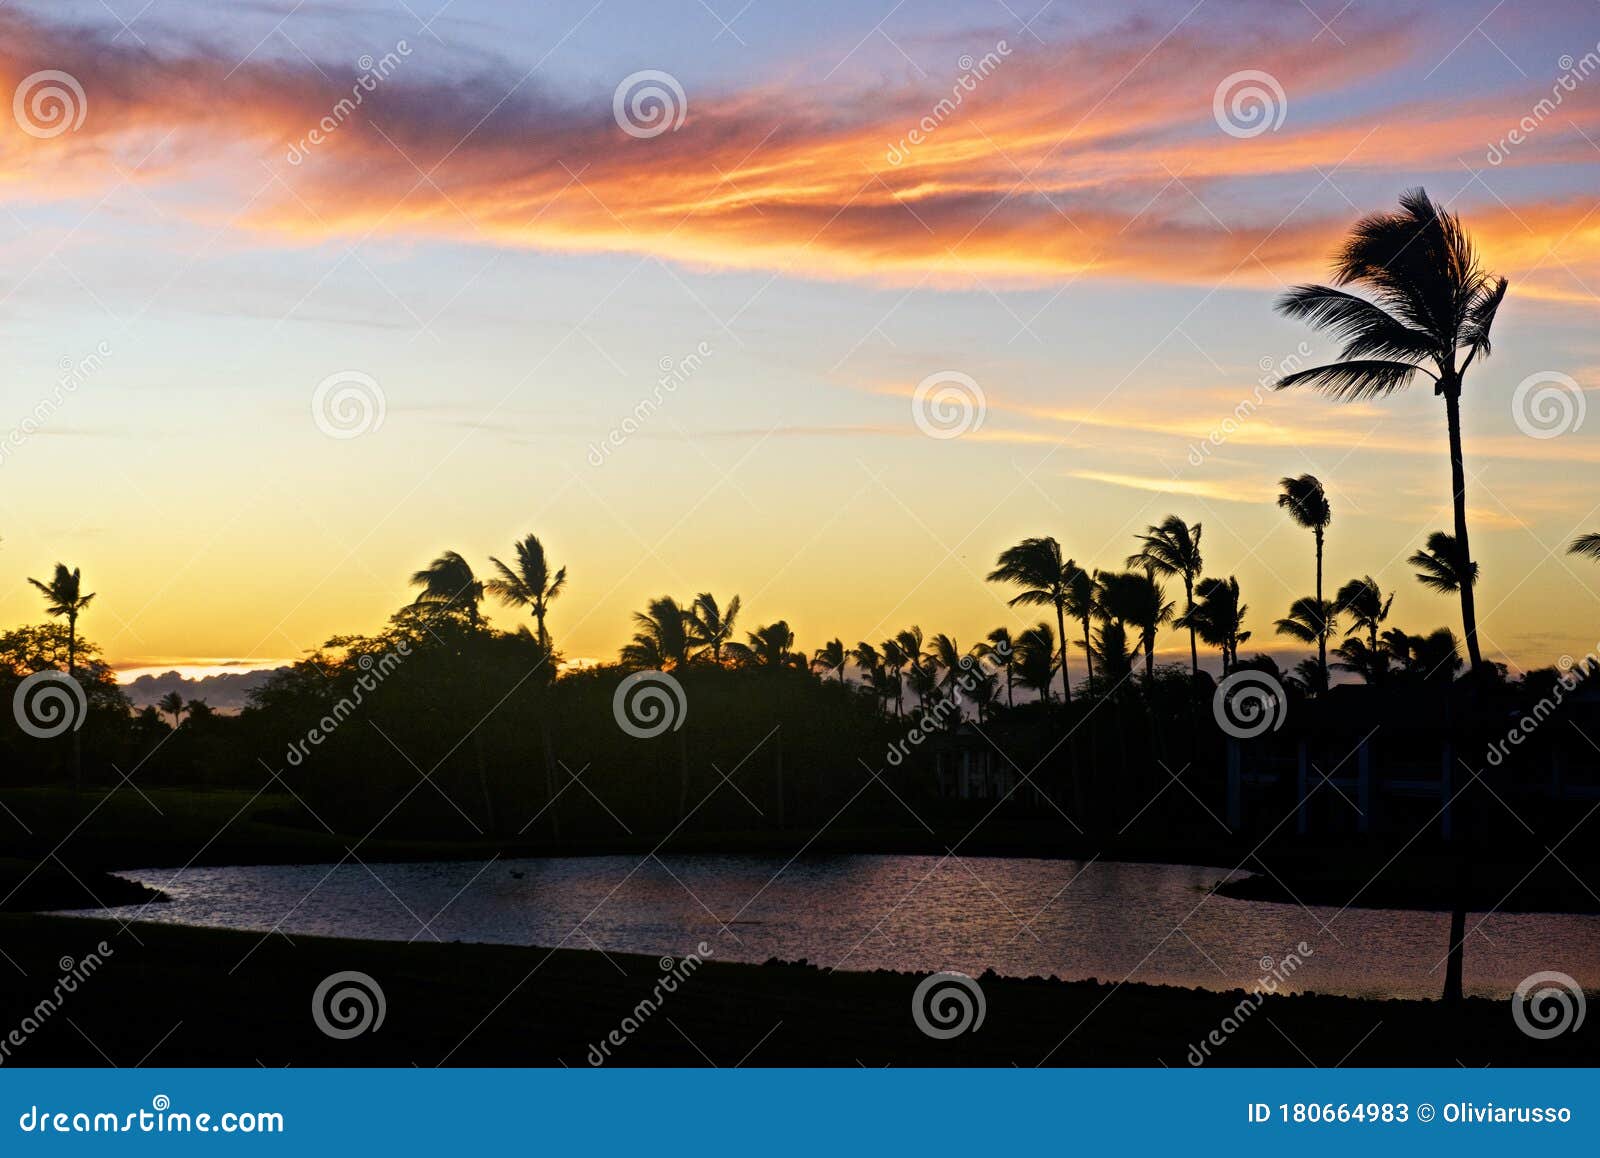 the sunset big island hawaii